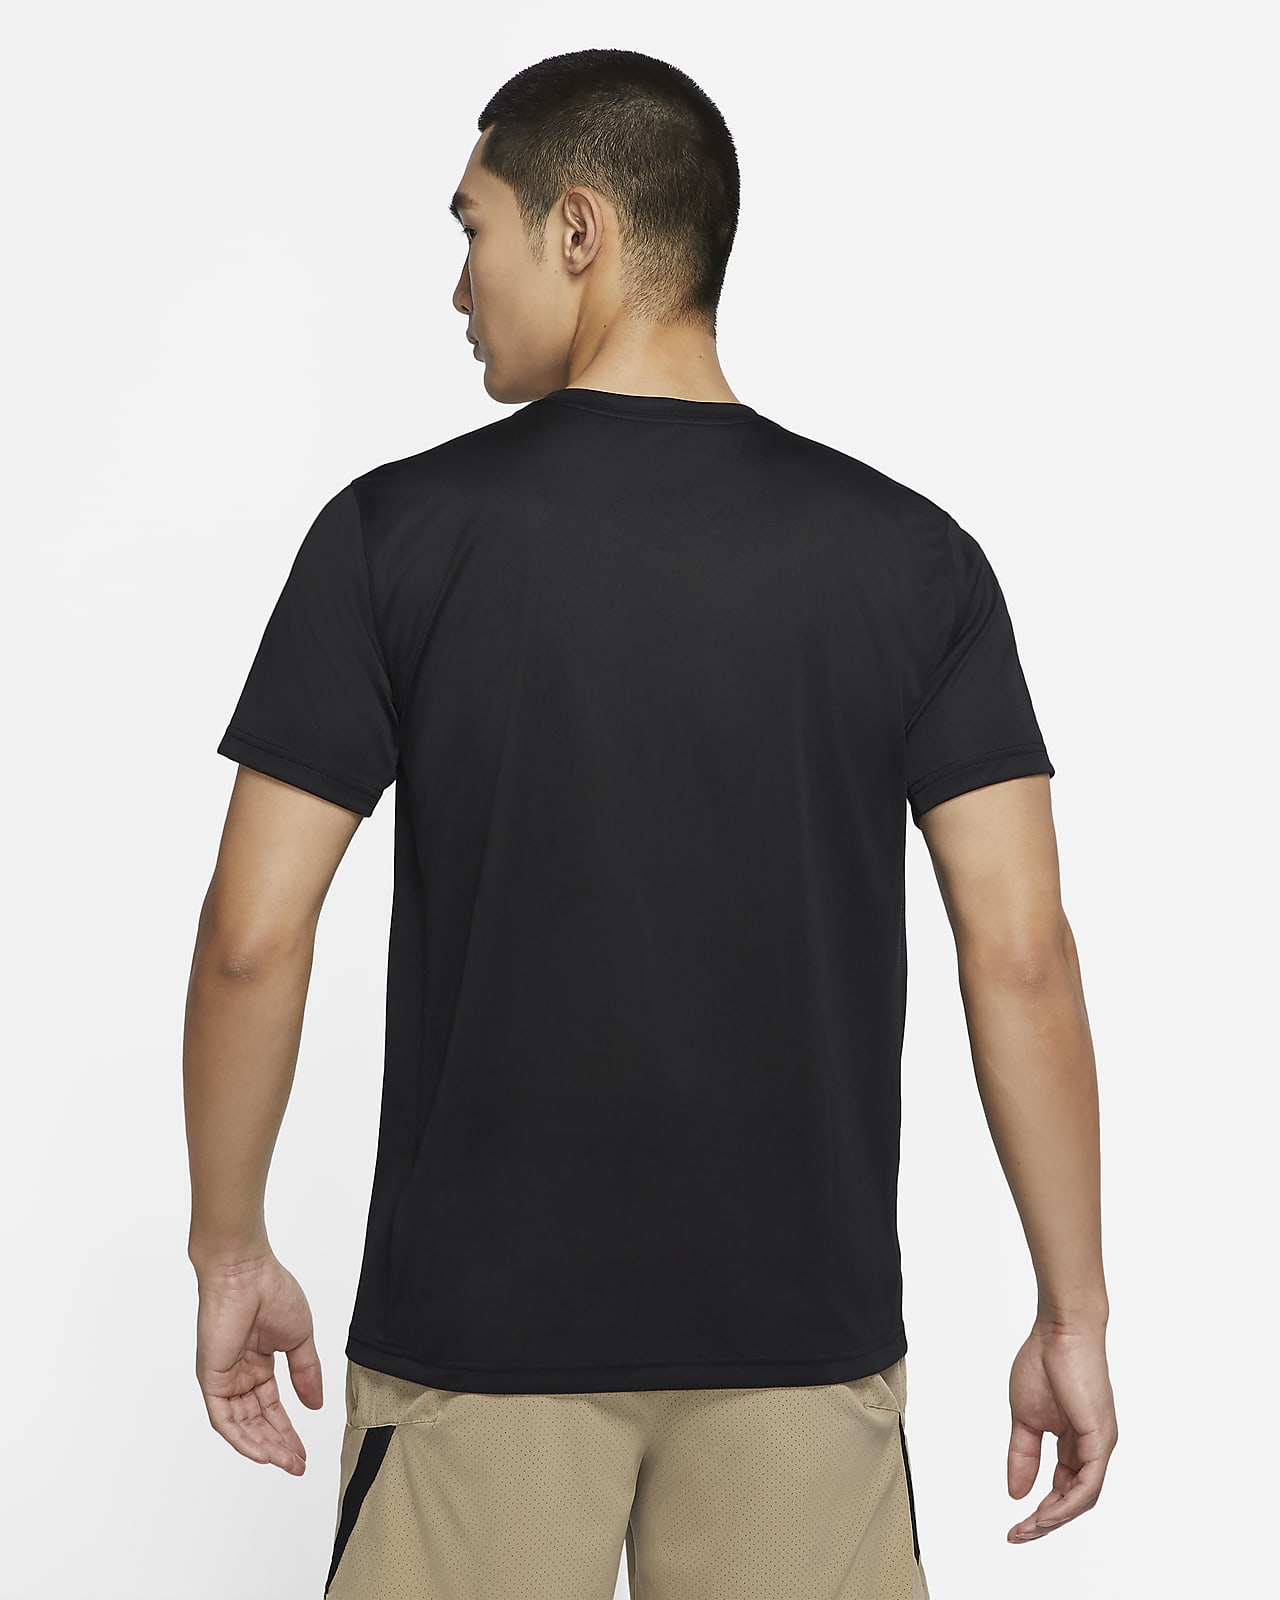 Nike Dri-FIT Legend Men's Graphic Training T-Shirt. Nike ID